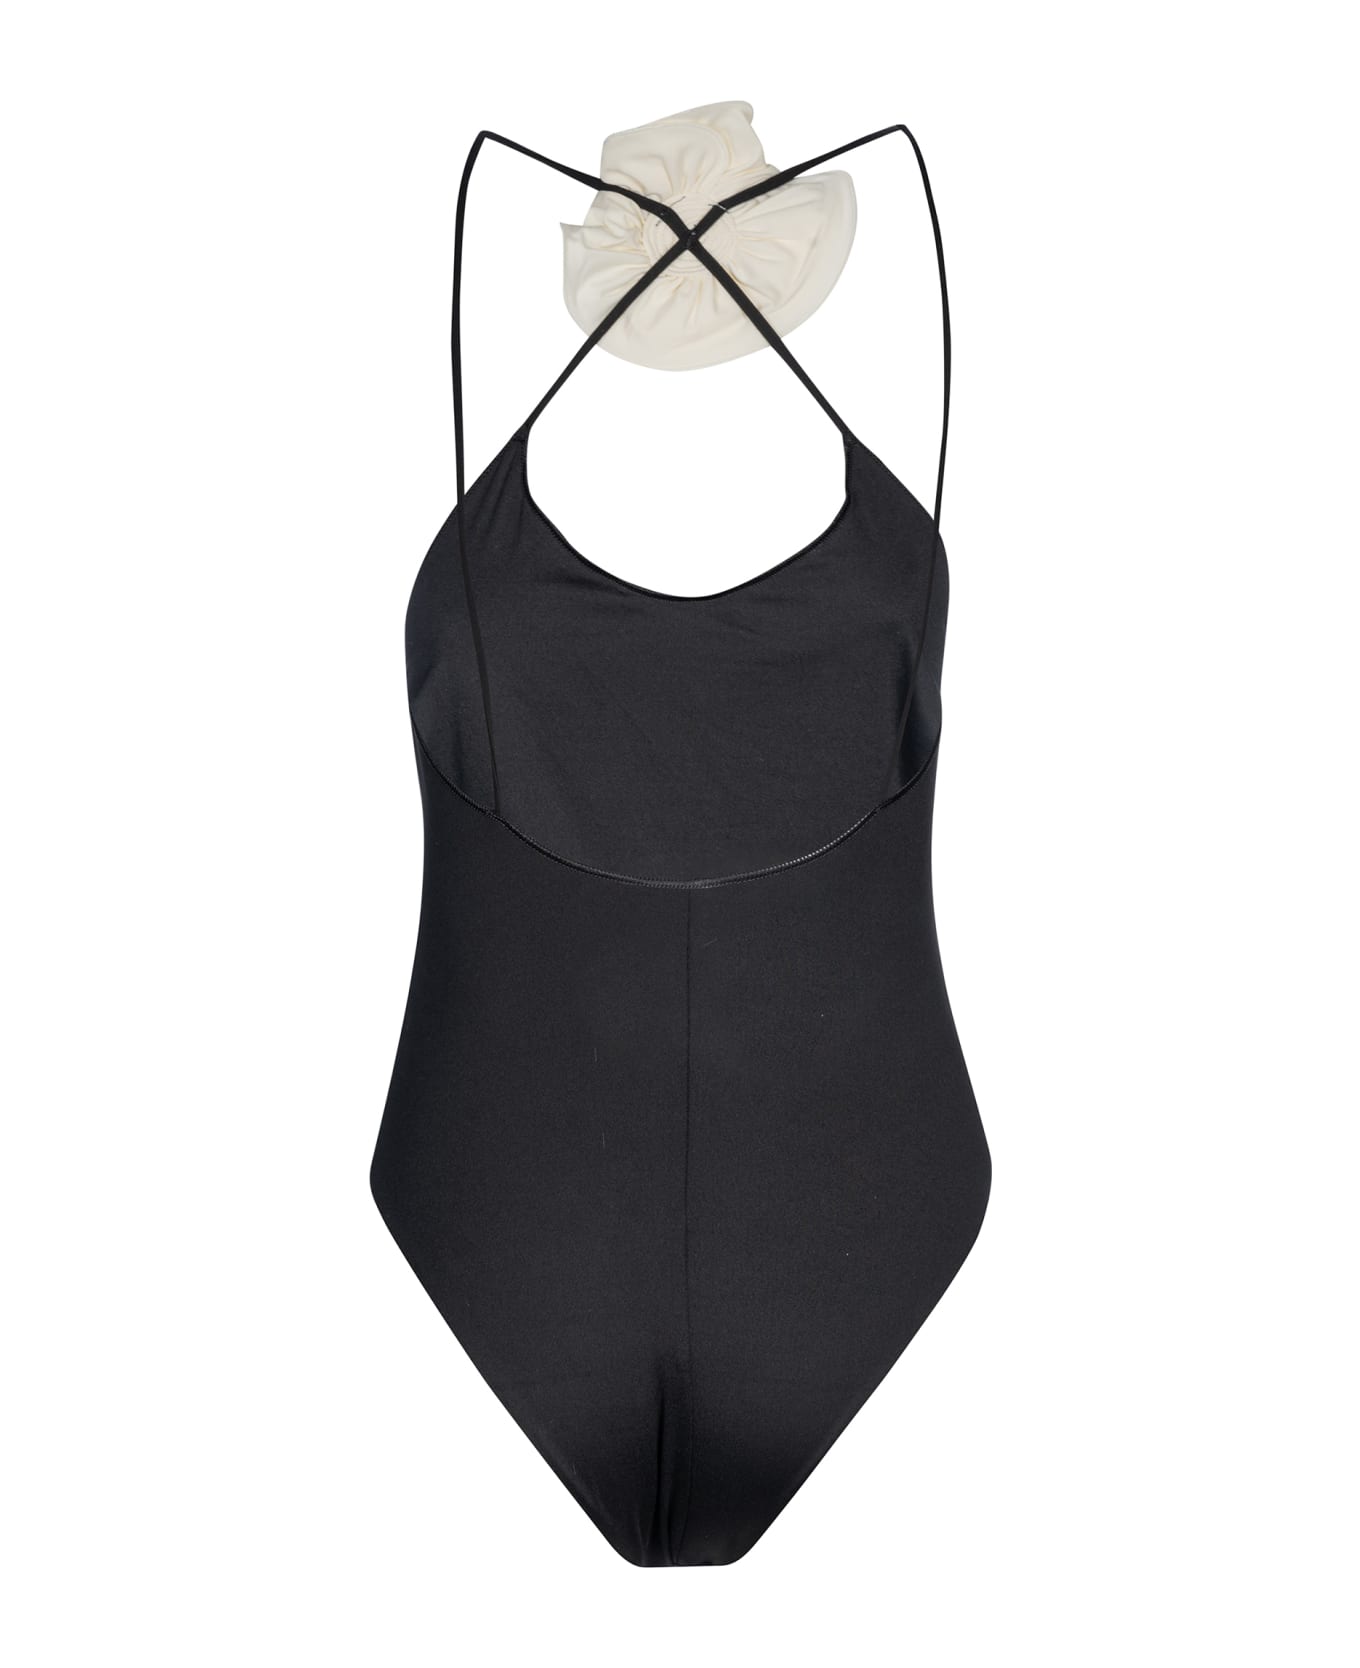 La Reveche Petra One-piece Bikini - Black/Ivory